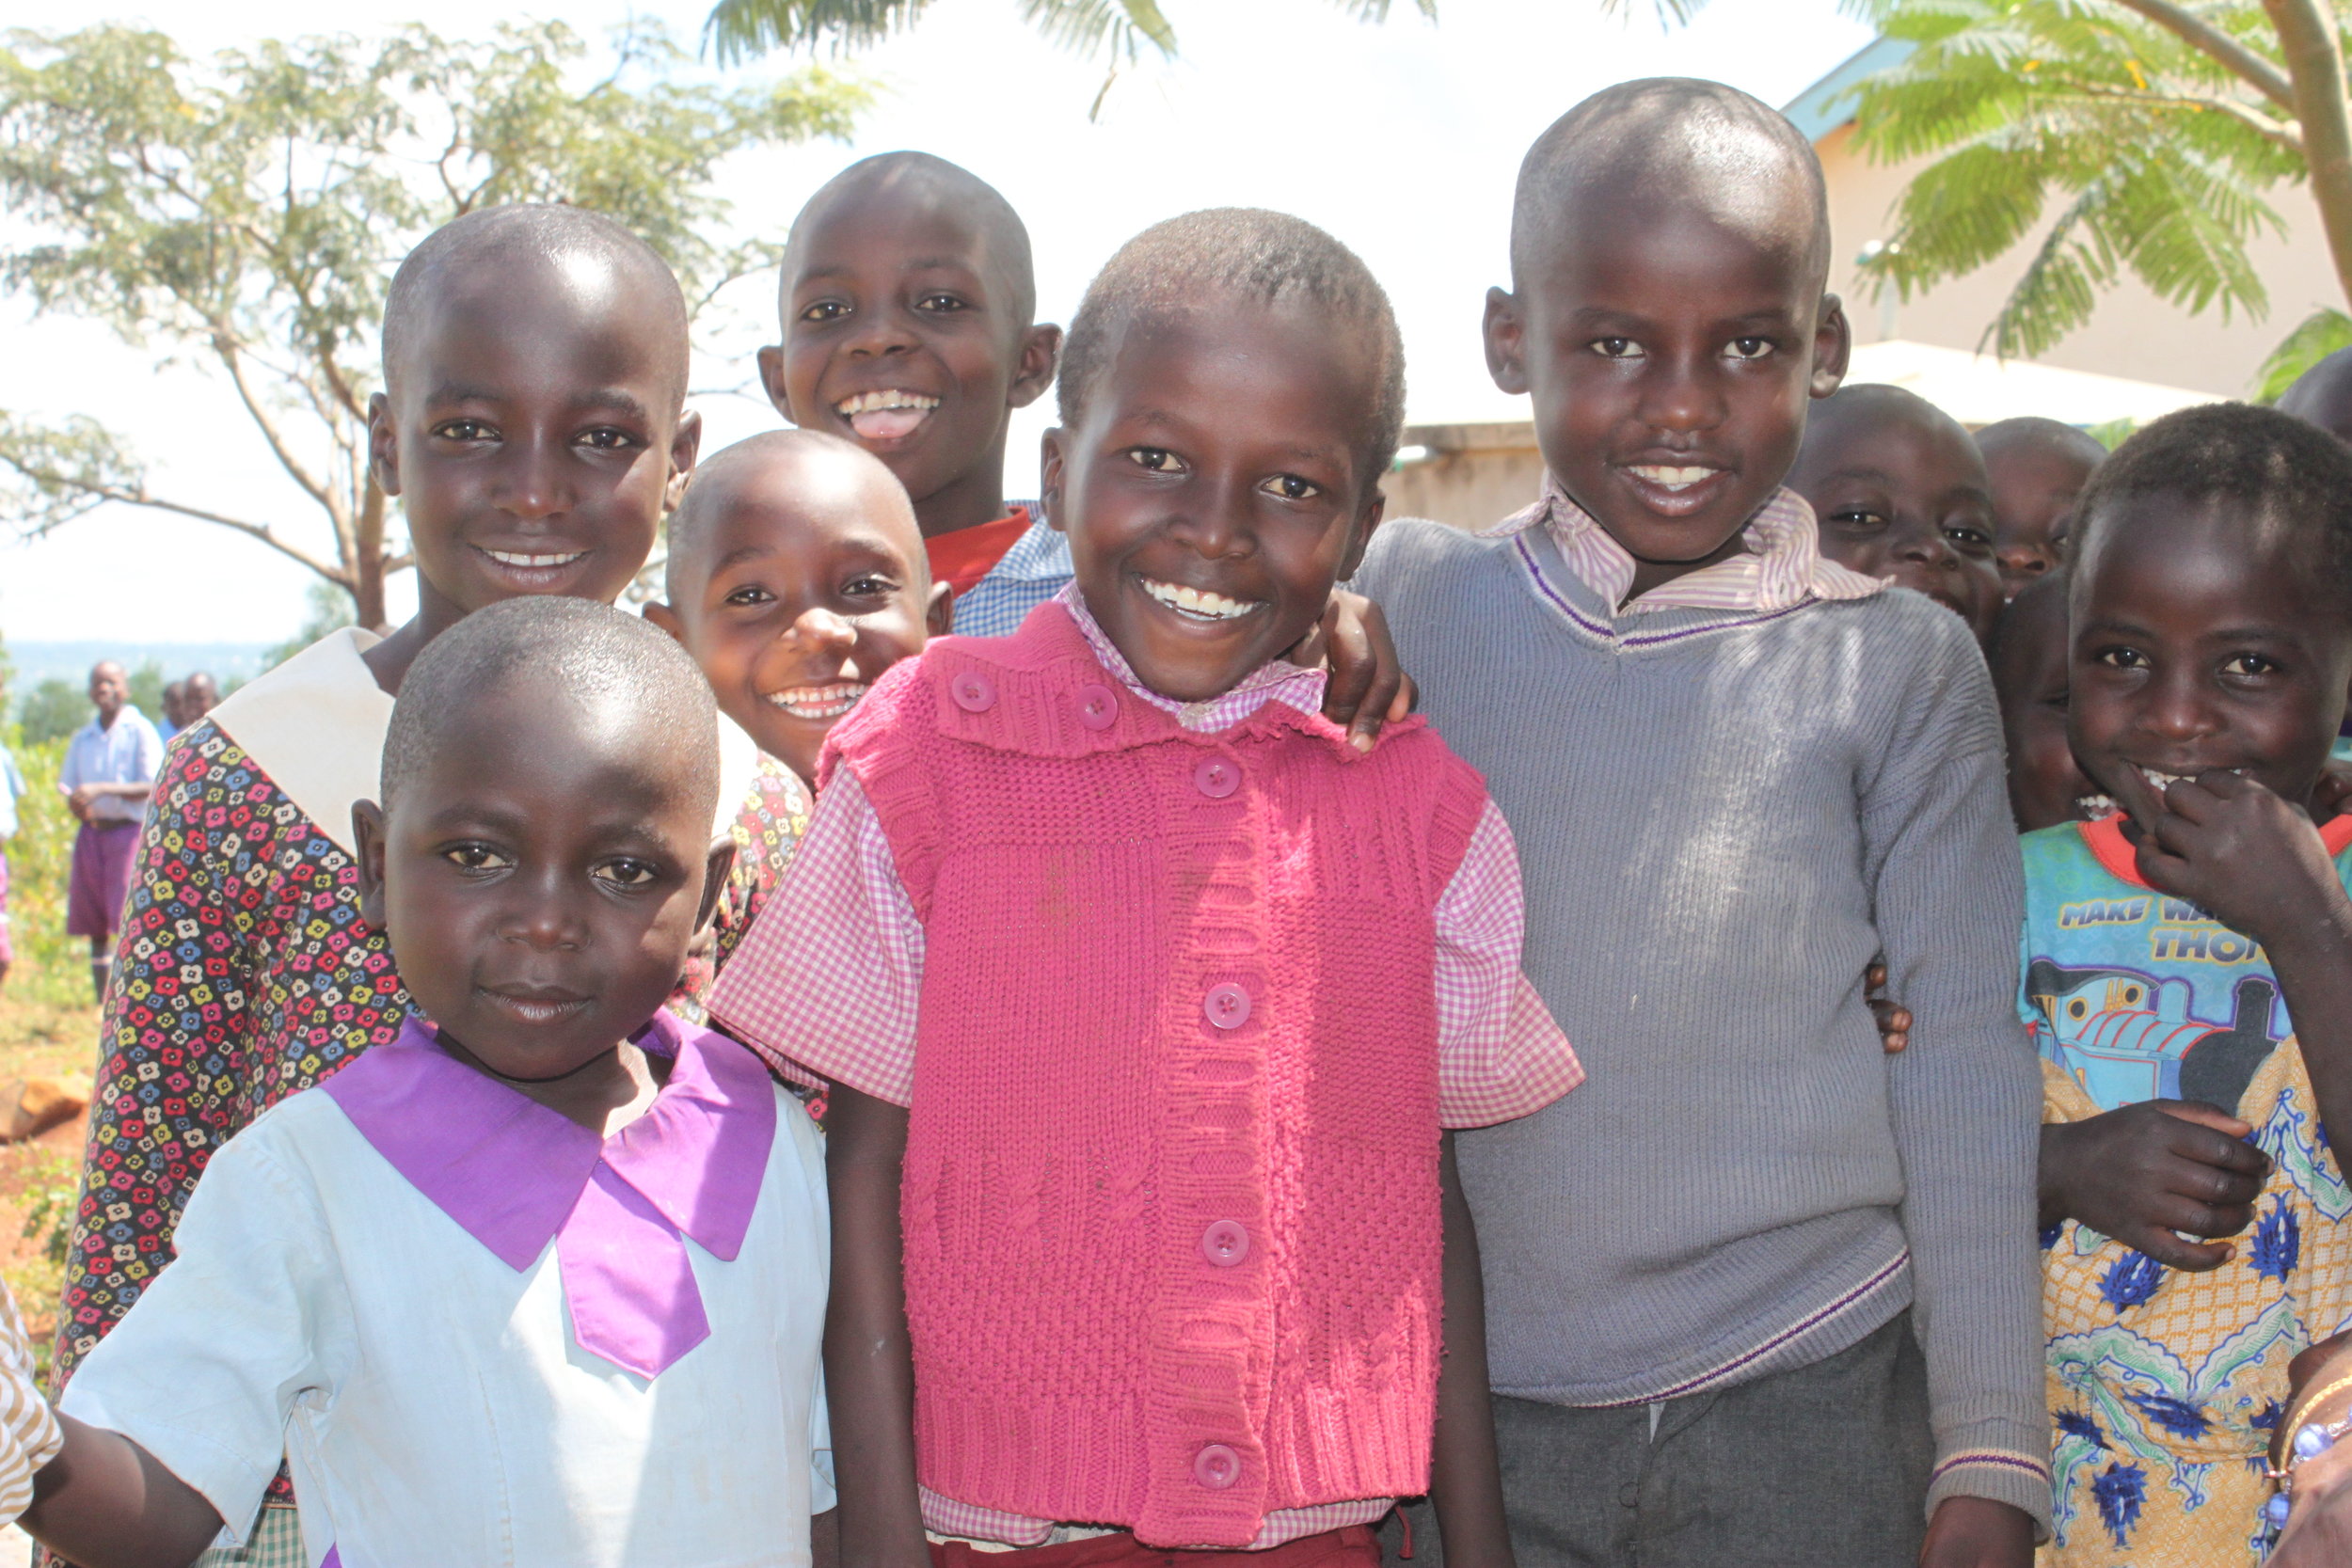 IMG_6918 - Wangu Primary School Siaya District Kenya (Credit Jessica Jabbour).JPG